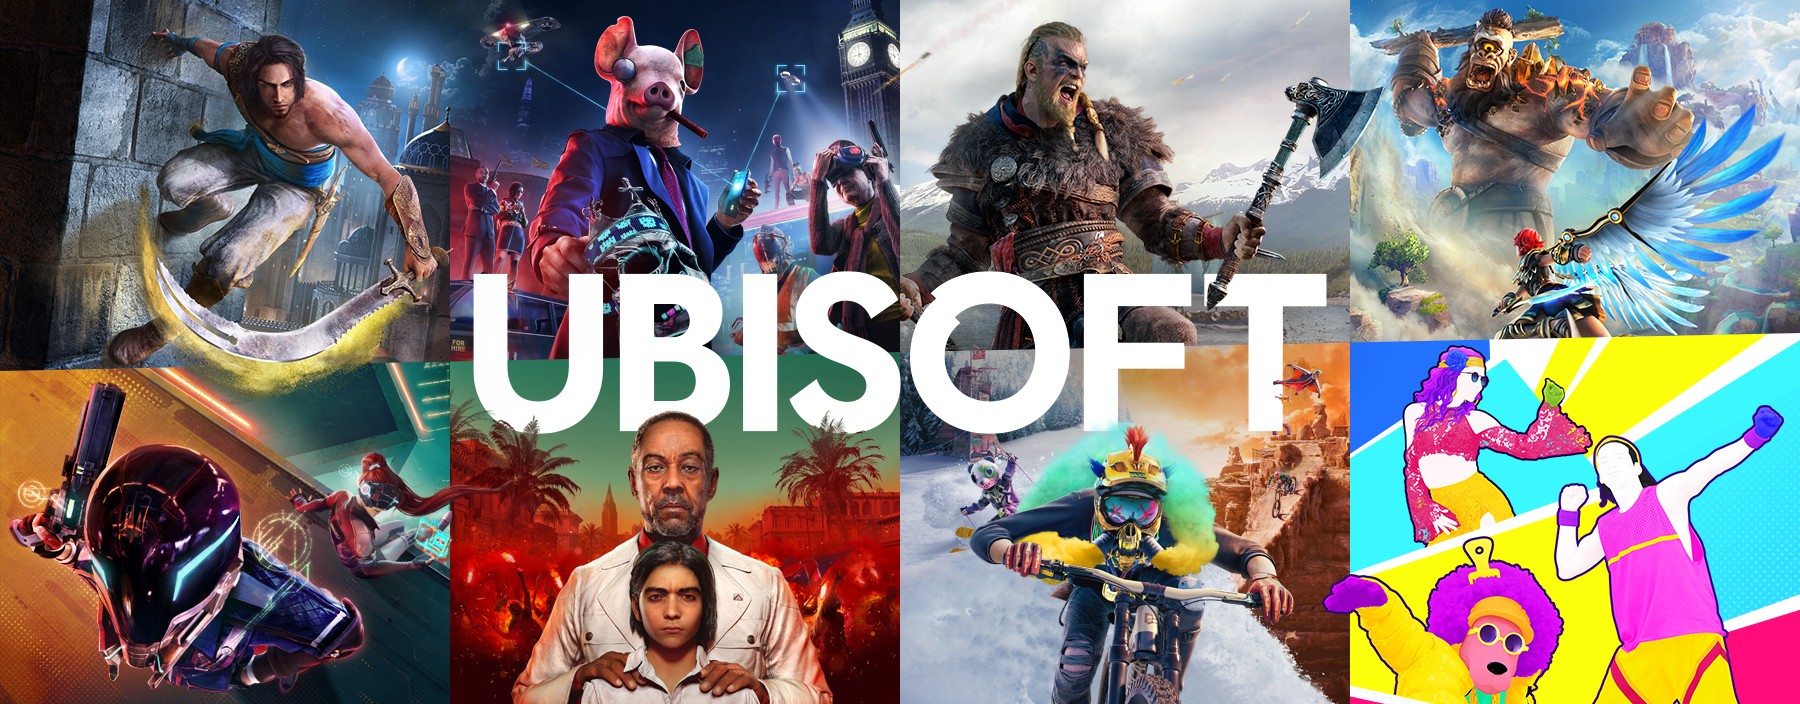 Ubisoft Stockholm Employees, Location, Careers | LinkedIn